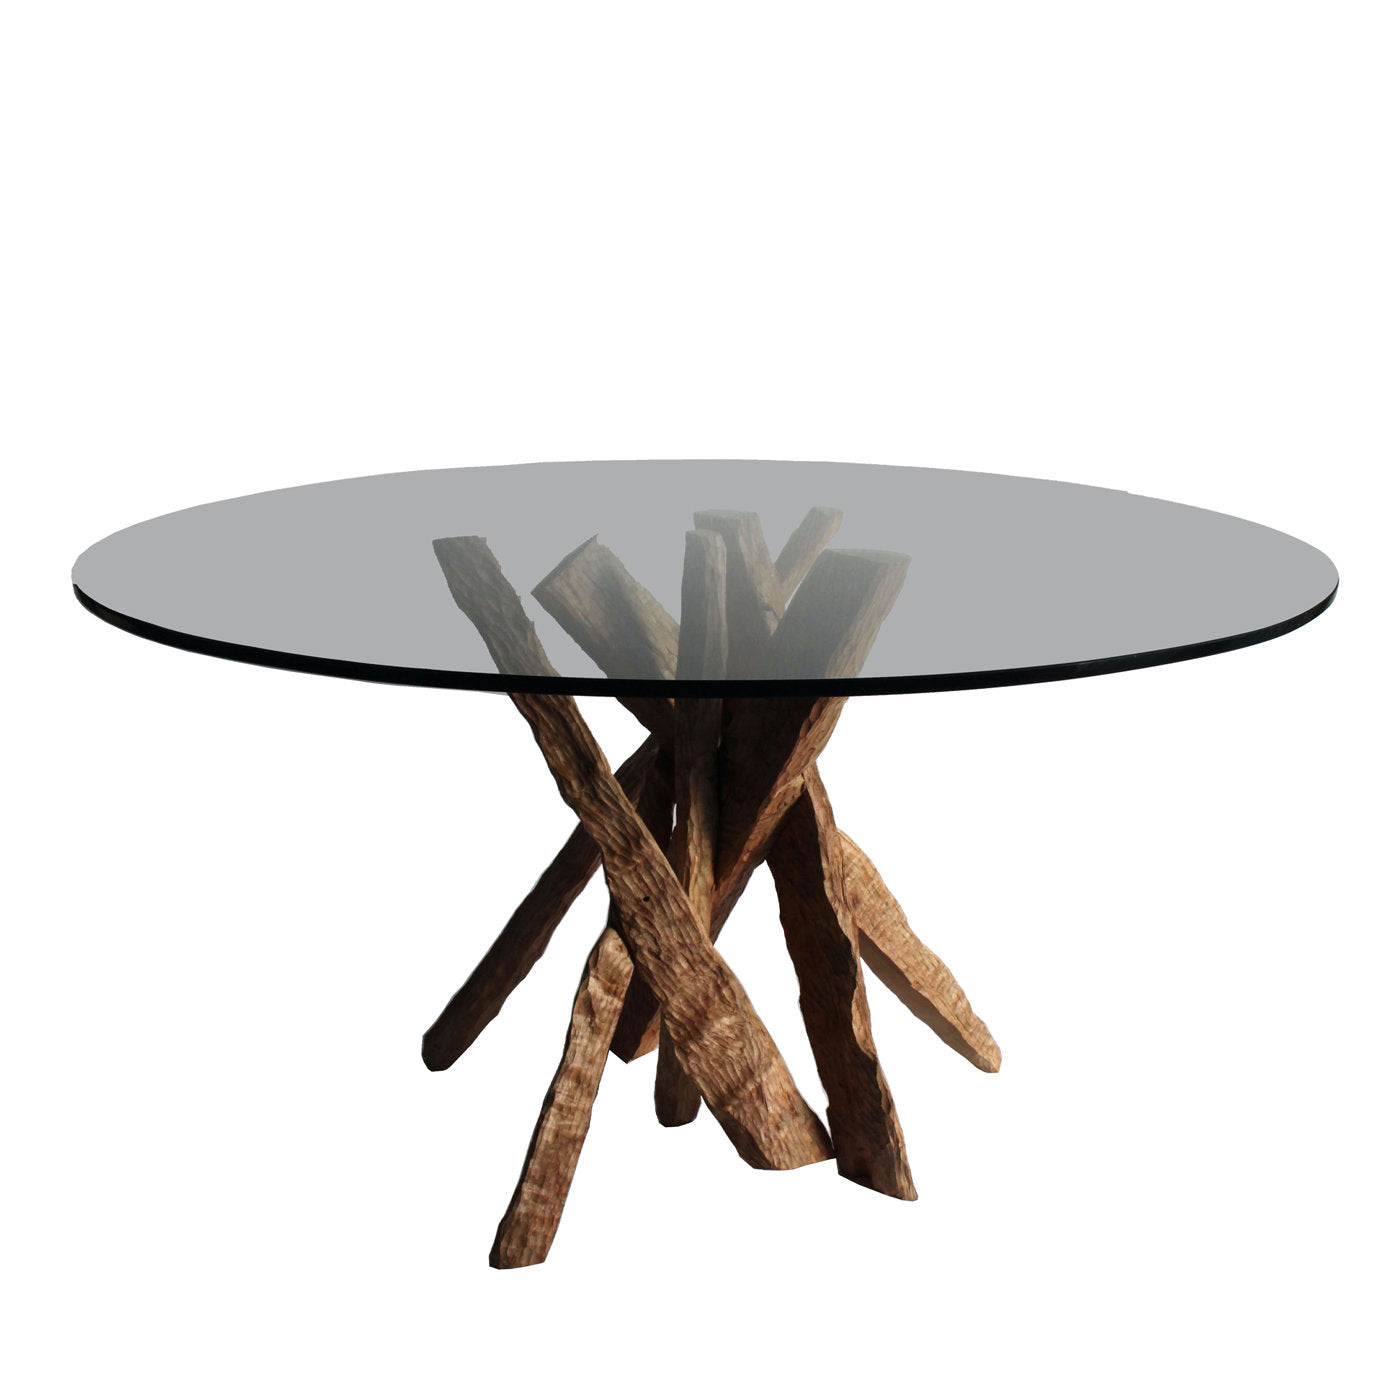 Amazzonia Table by Pietro Meccani - Main view